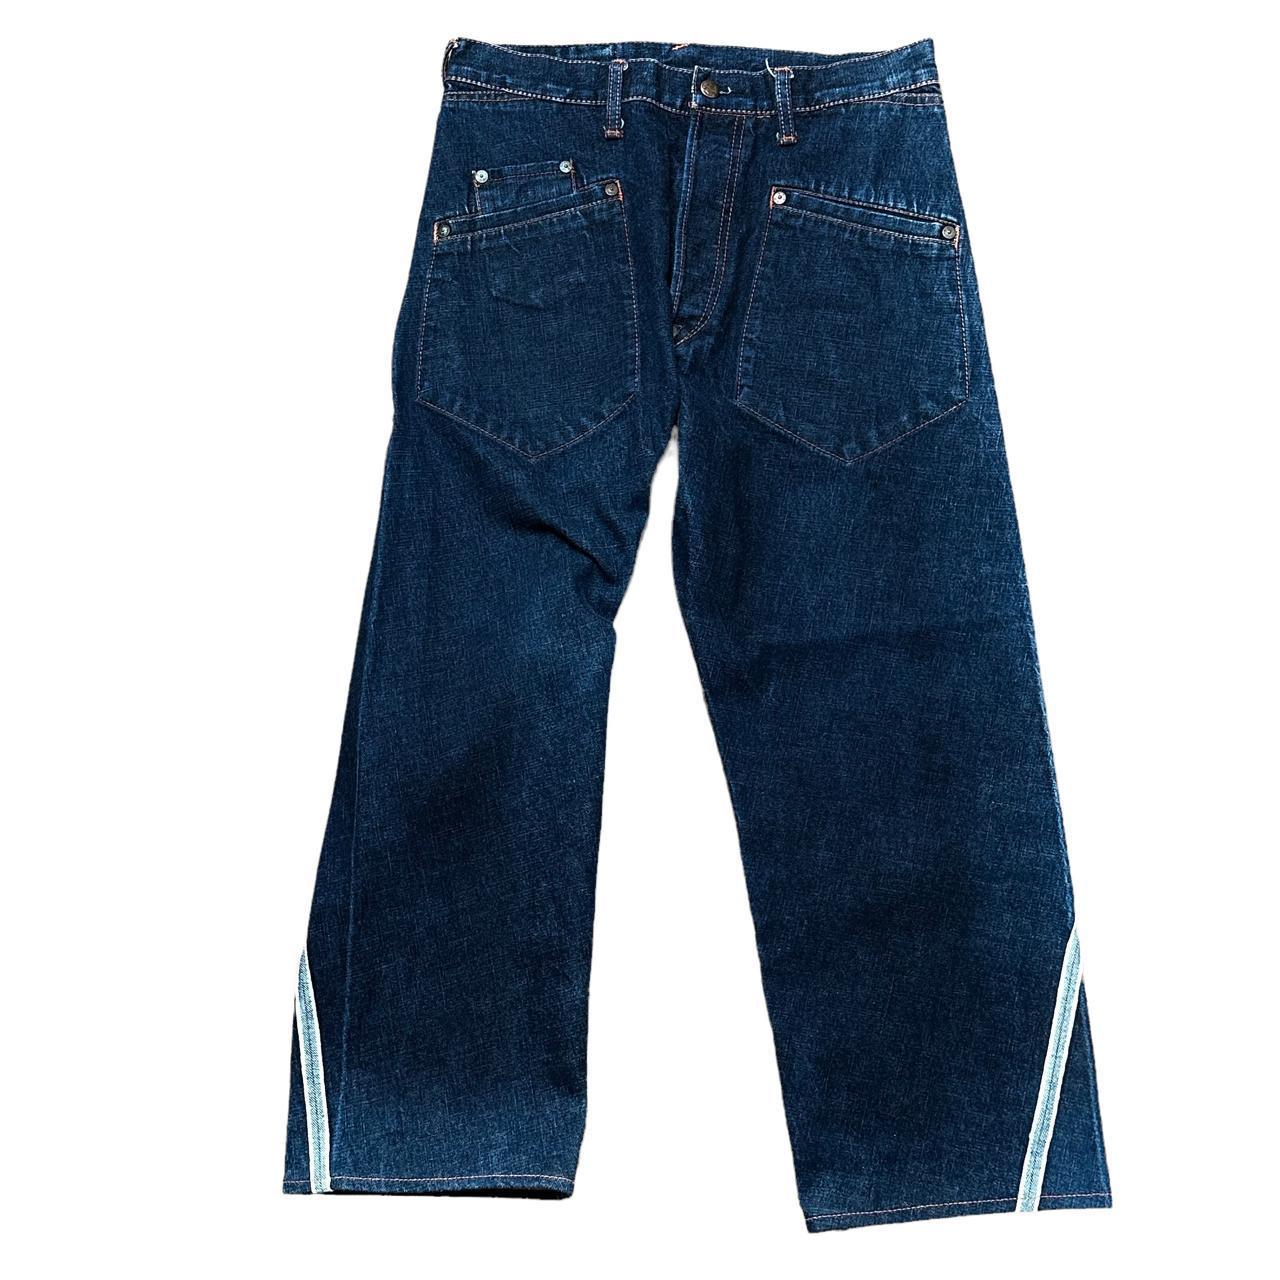 EVISU Straight Pants 2001/EVISU GENES OSAKA/Kai/Button fly Blue Jeans - Known Source